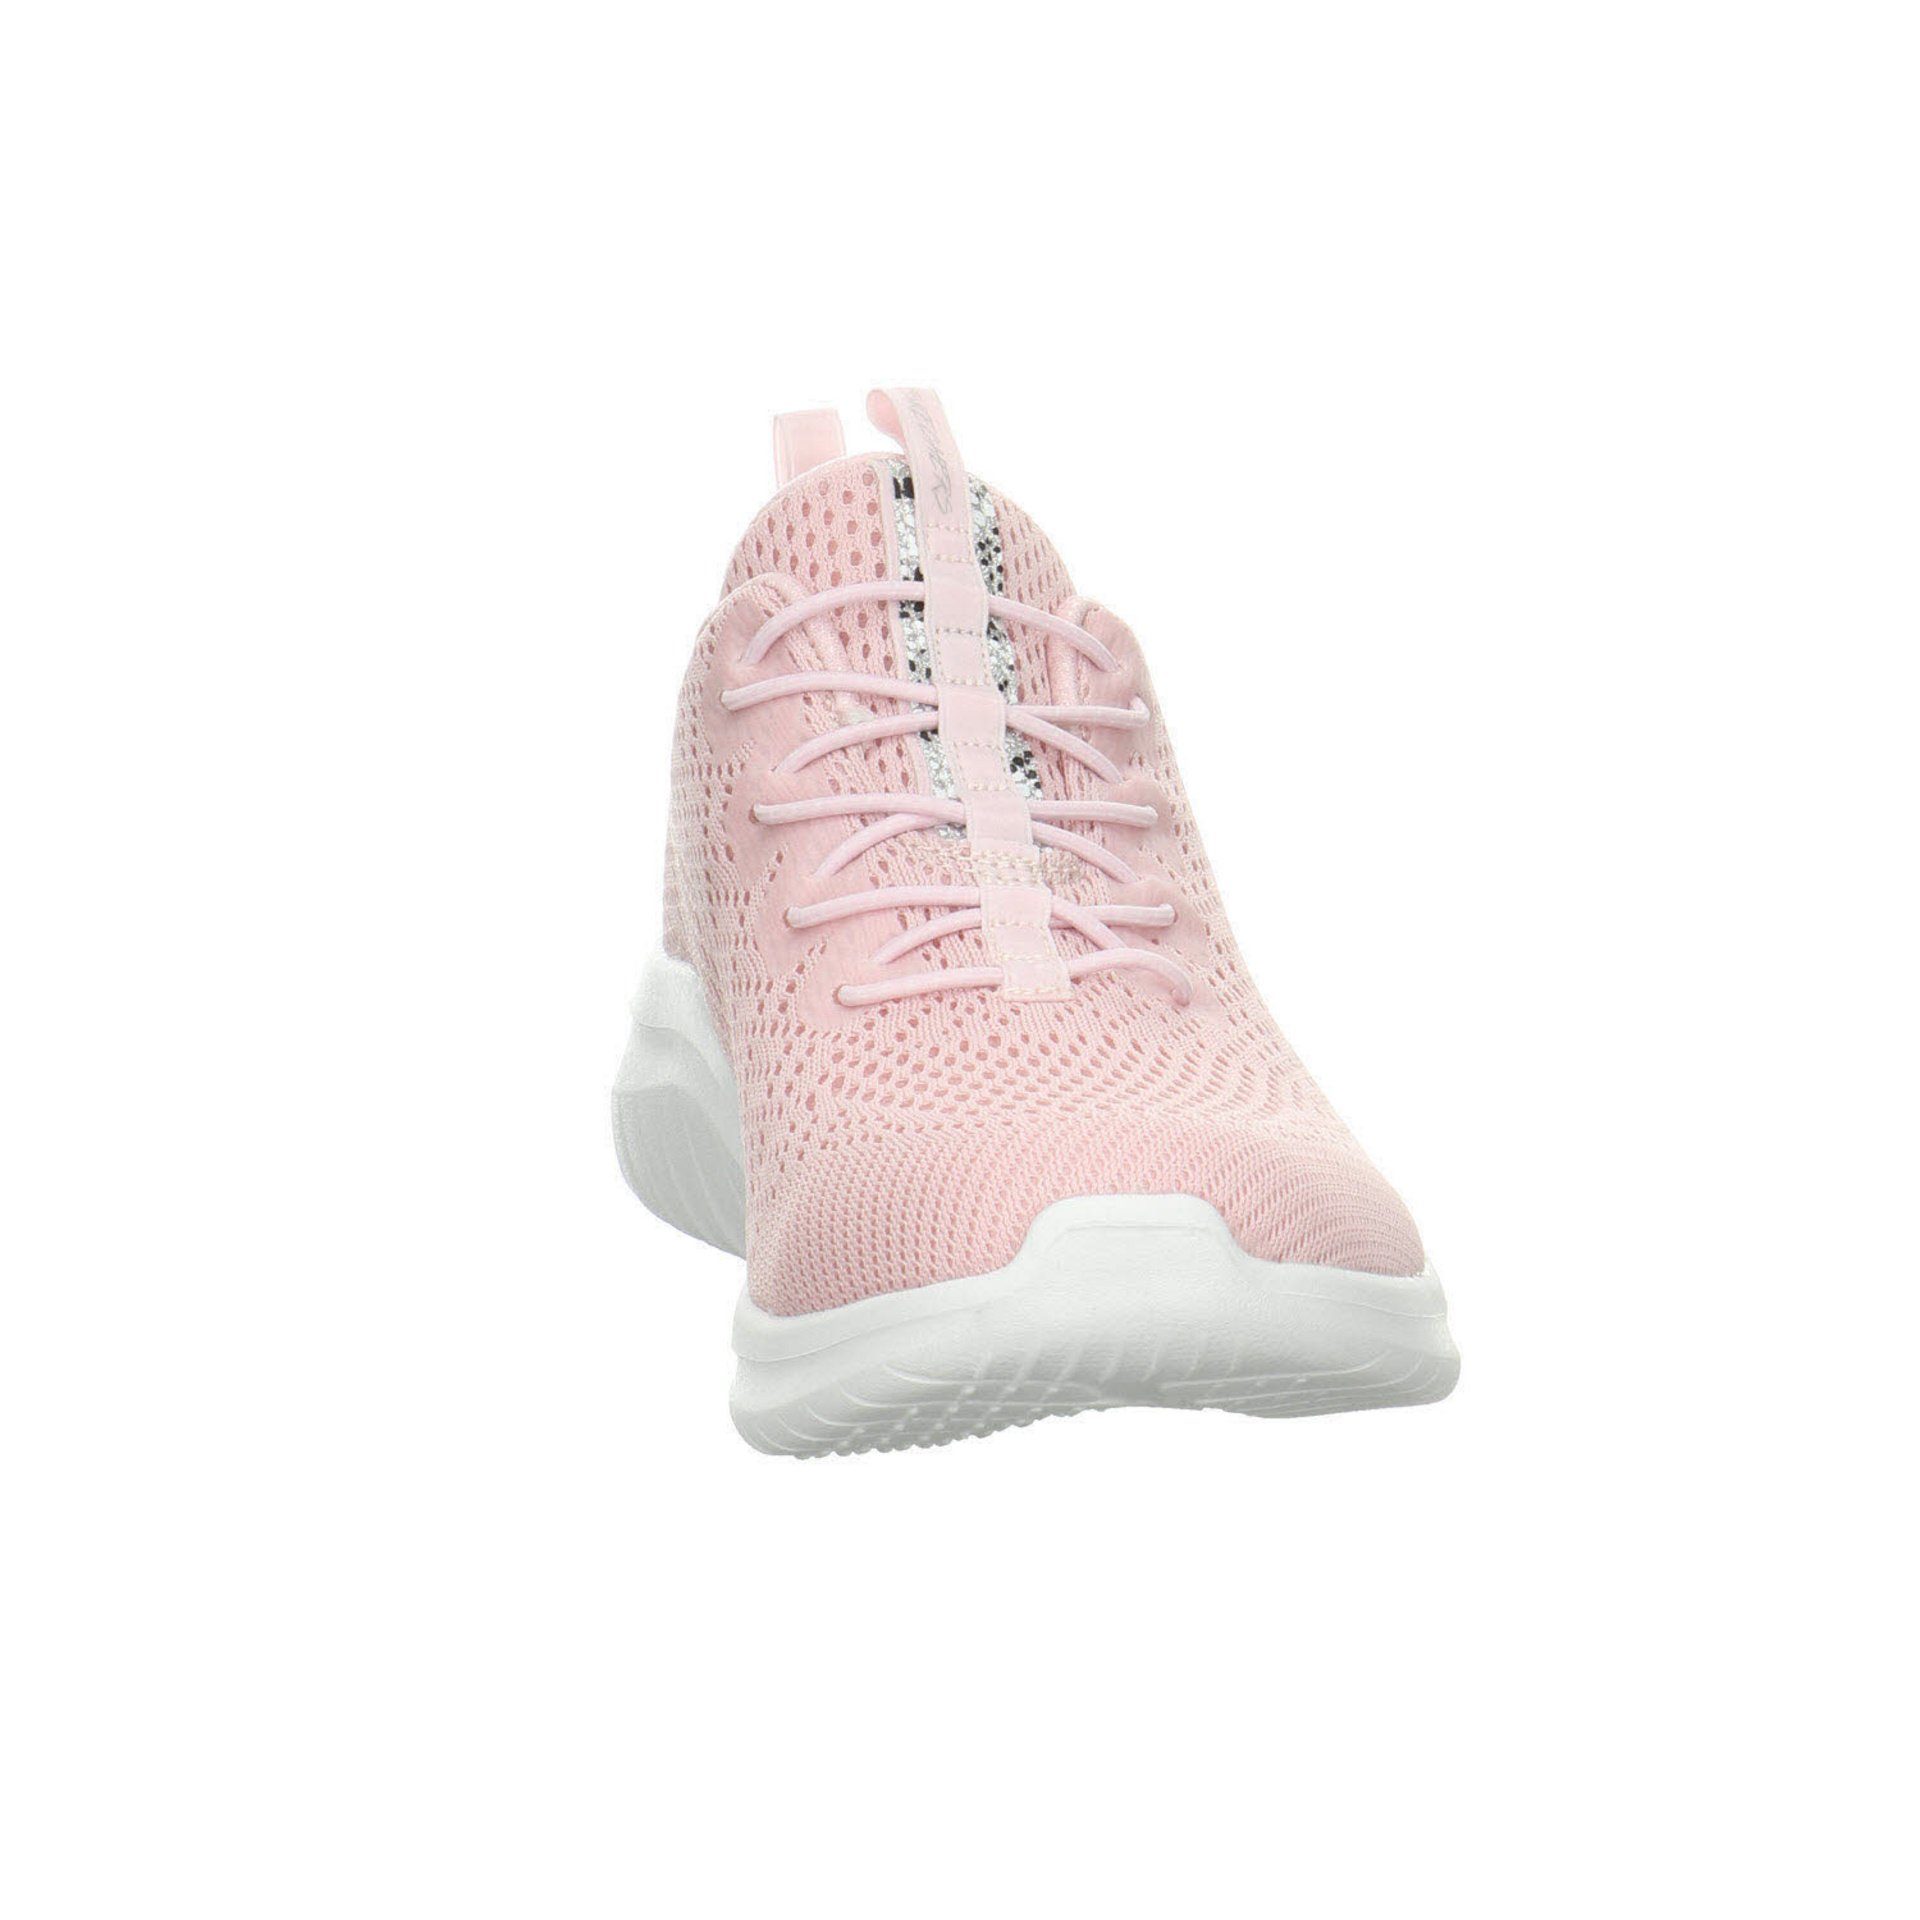 Skechers Damen Sneaker lt.pink/white Schuhe Sneaker Sneaker Textil 2.0 Flex Ultra